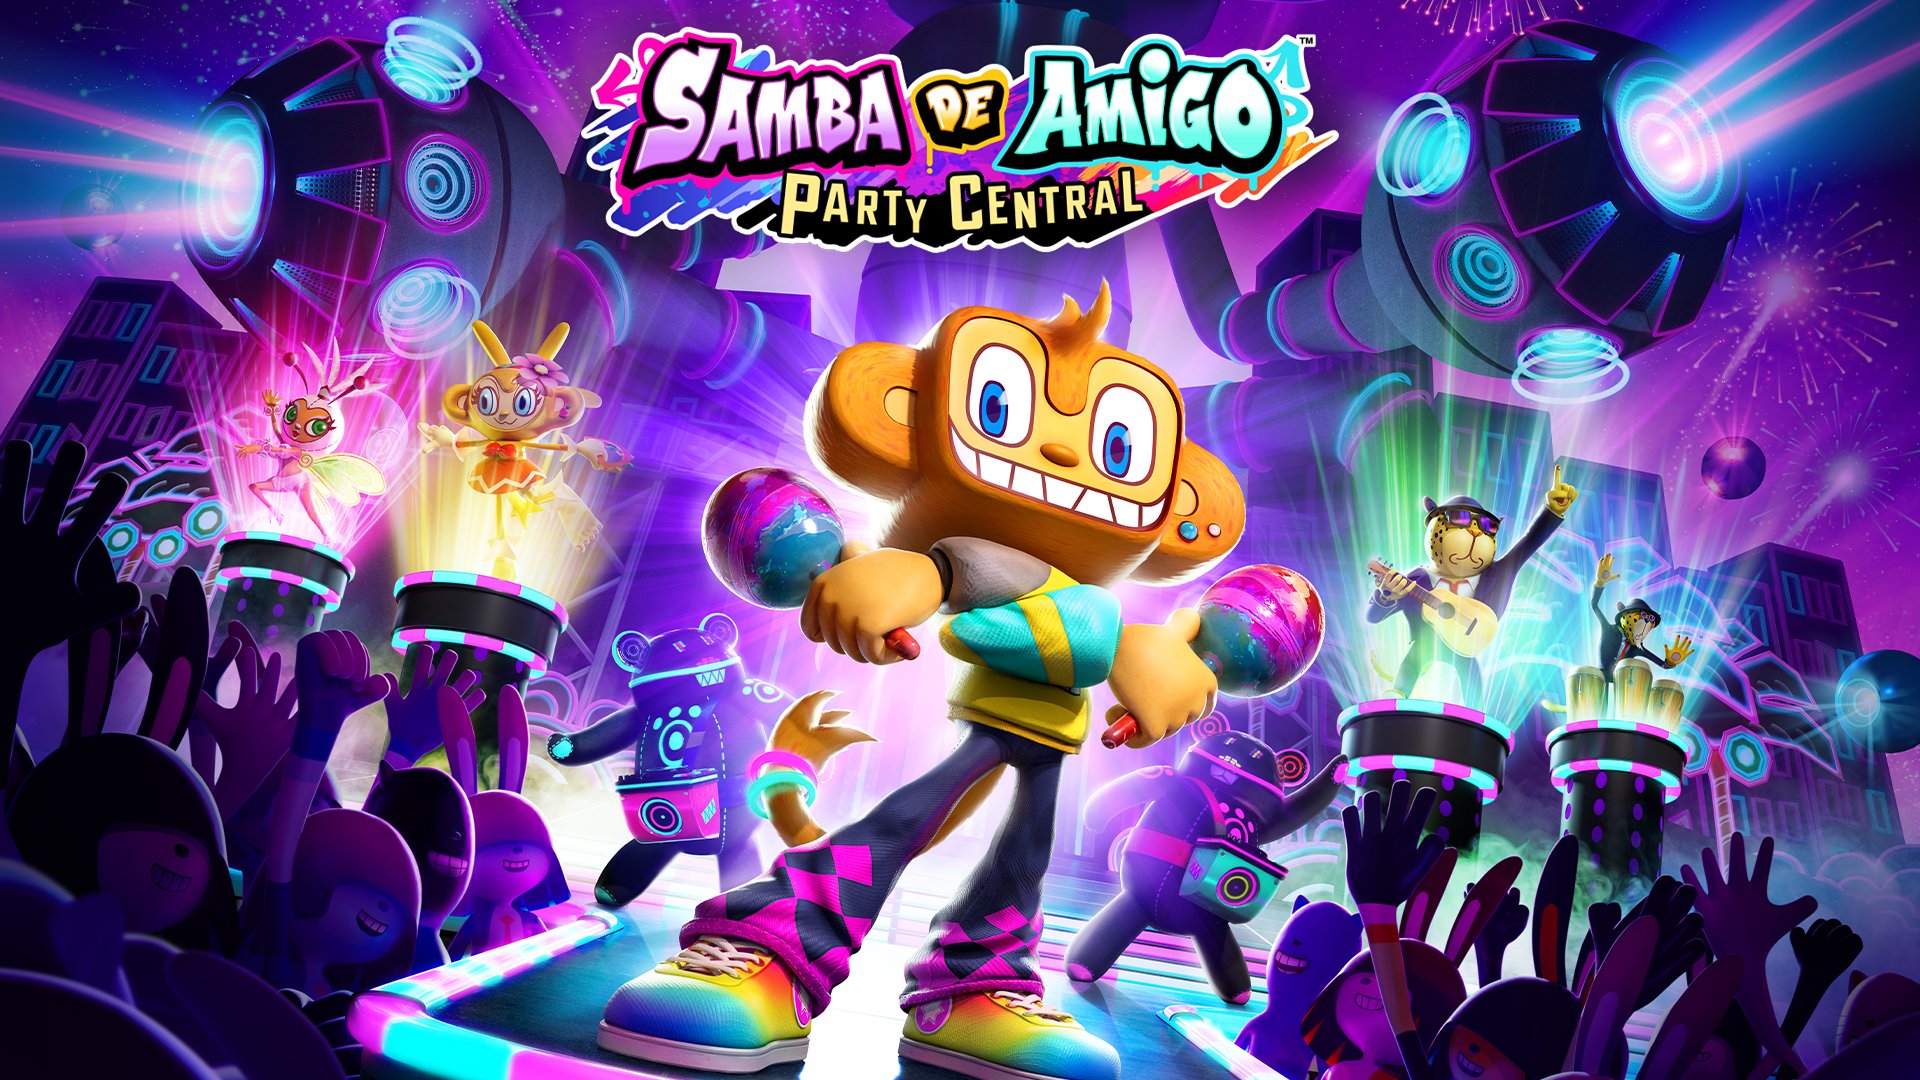 Samba de amigo party central secouera la switch cet été